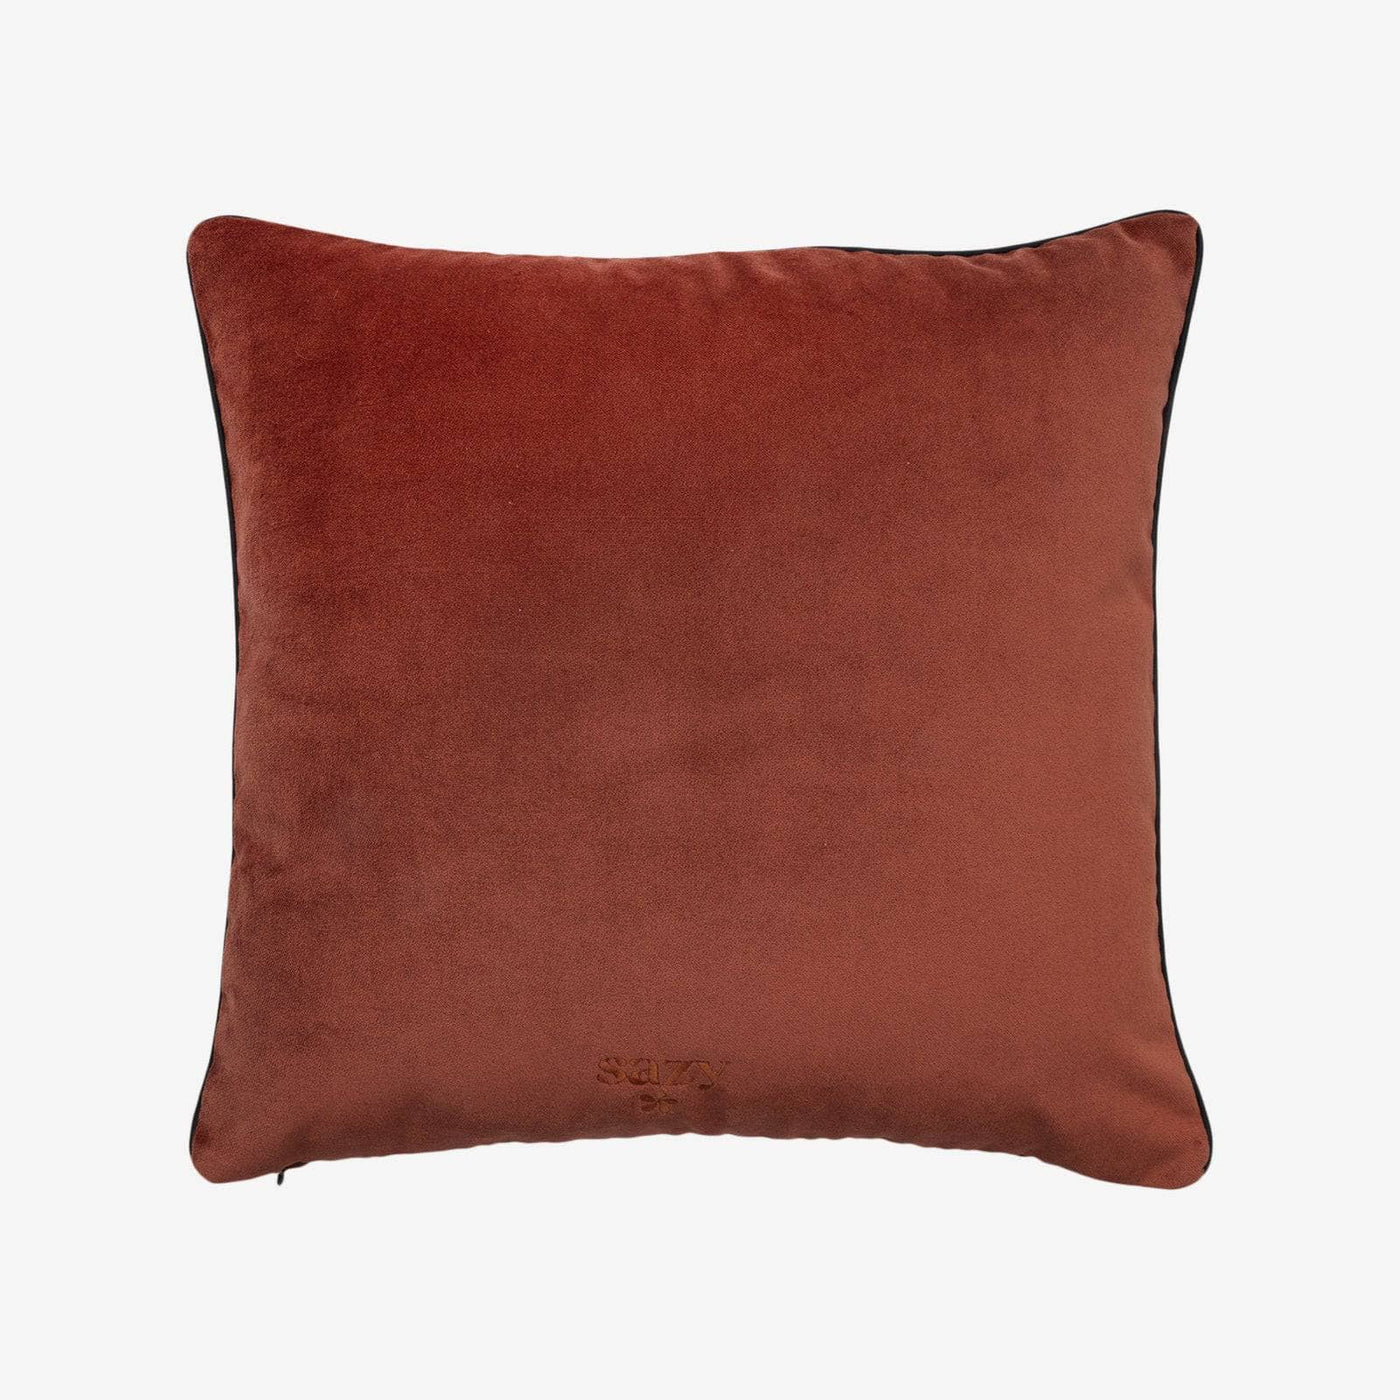 Sacred Eye Cushion Cover, Cinnamon - Silver, 45x45 cm - 3